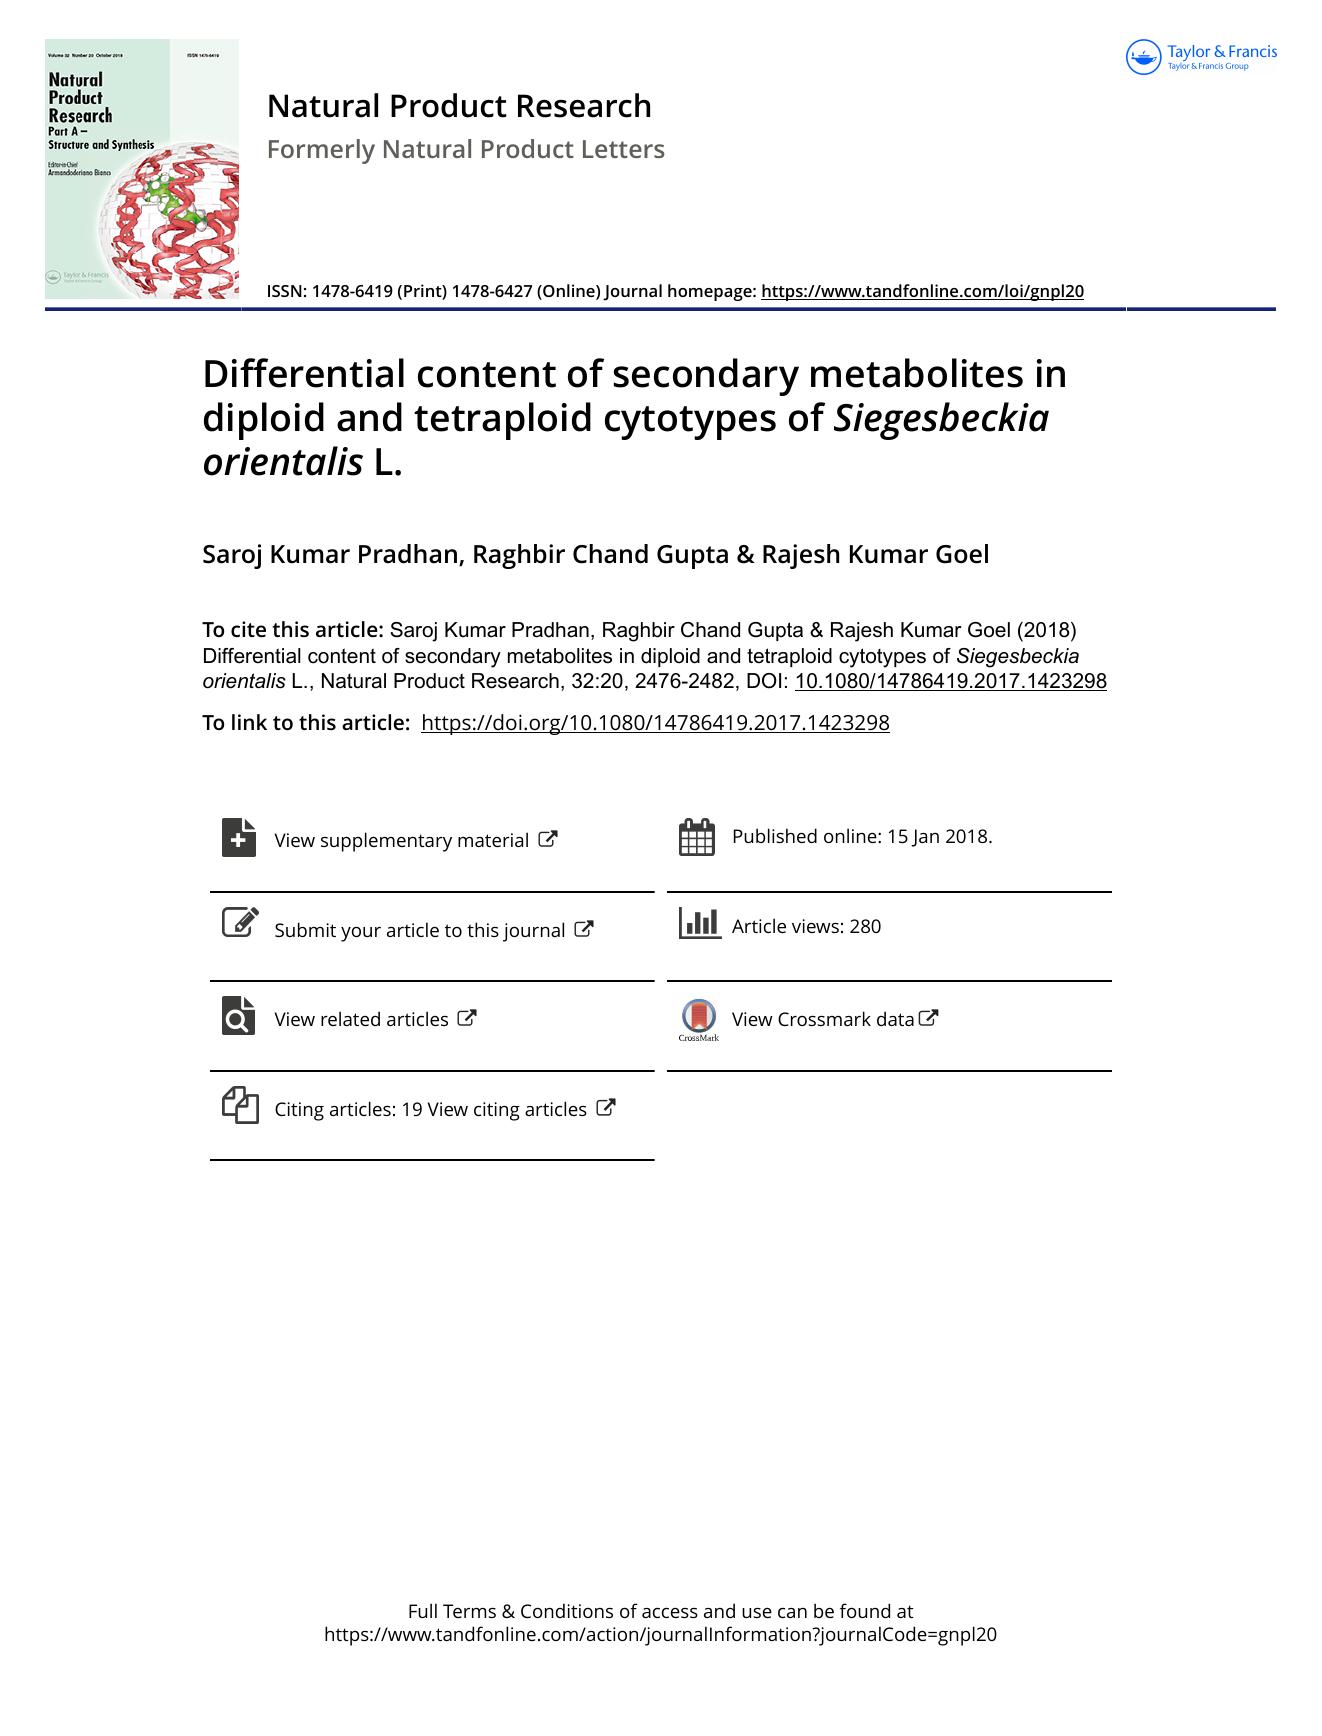 Differential content of secondary metabolites in diploid and tetraploid cytotypes of Siegesbeckia orientalis L. by Saroj Kumar Pradhan & Raghbir Chand Gupta & Rajesh Kumar Goel